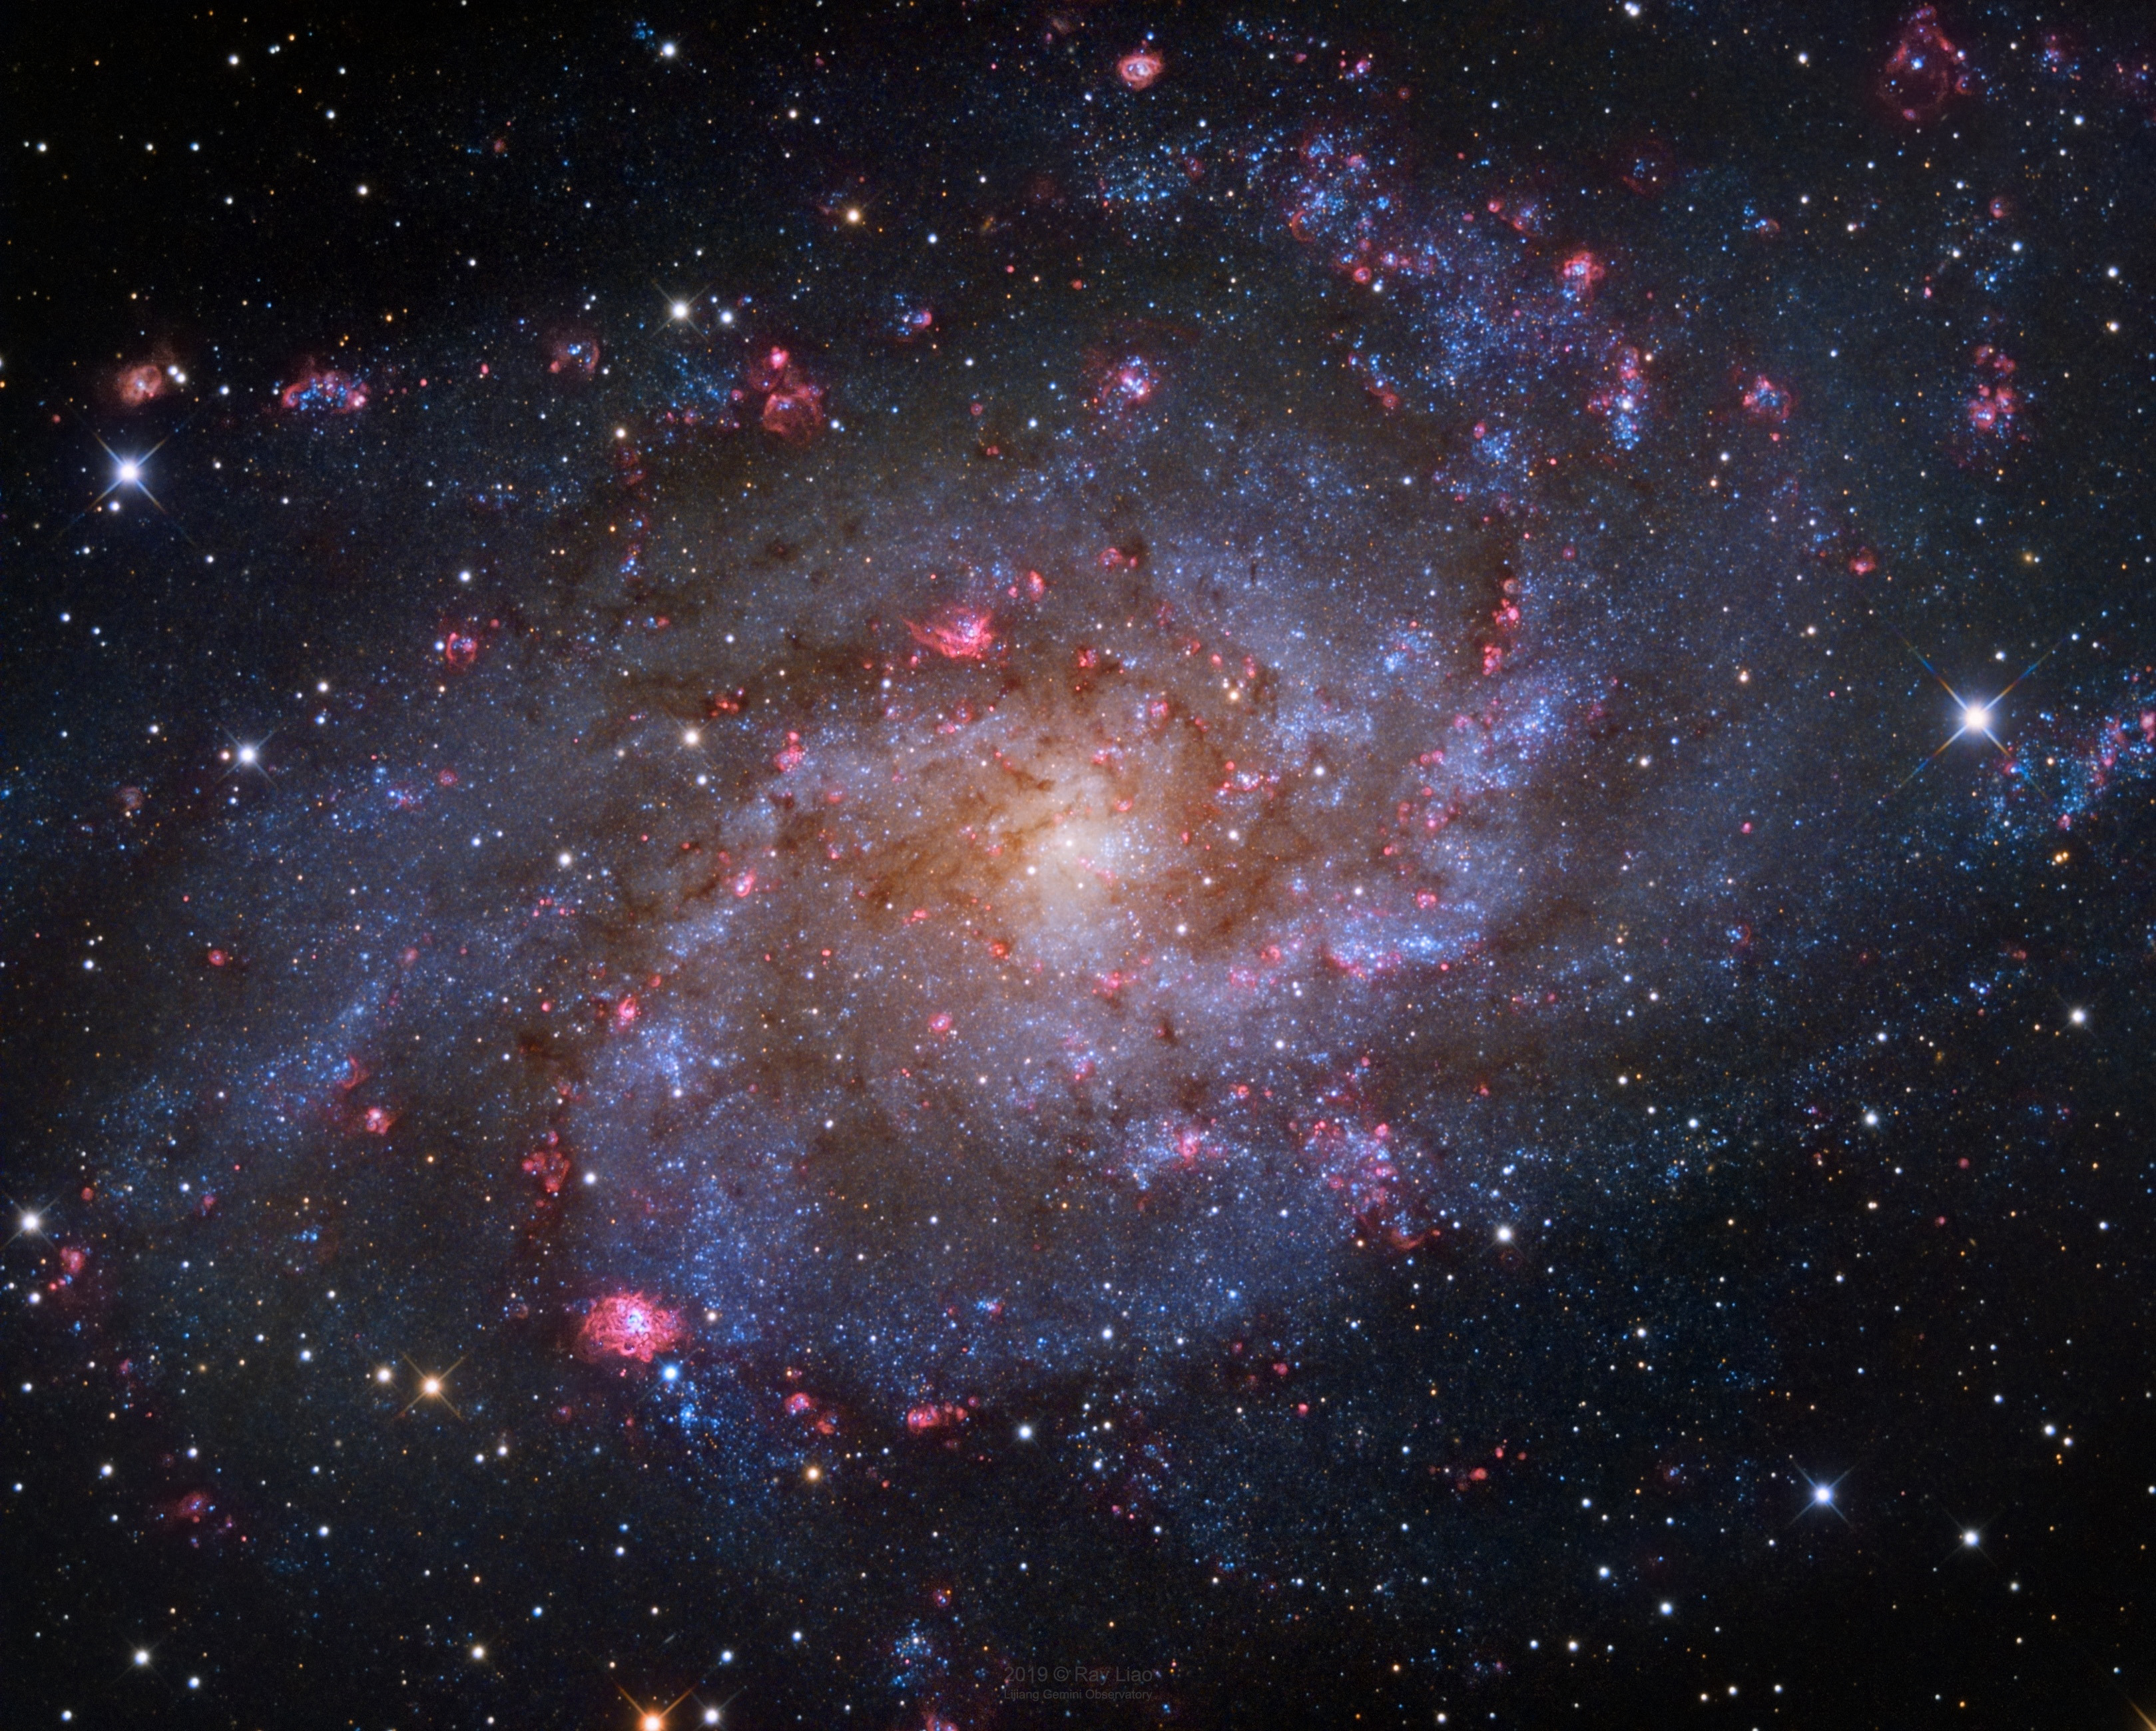 M33-HaLRGB-RayLiao.jpg